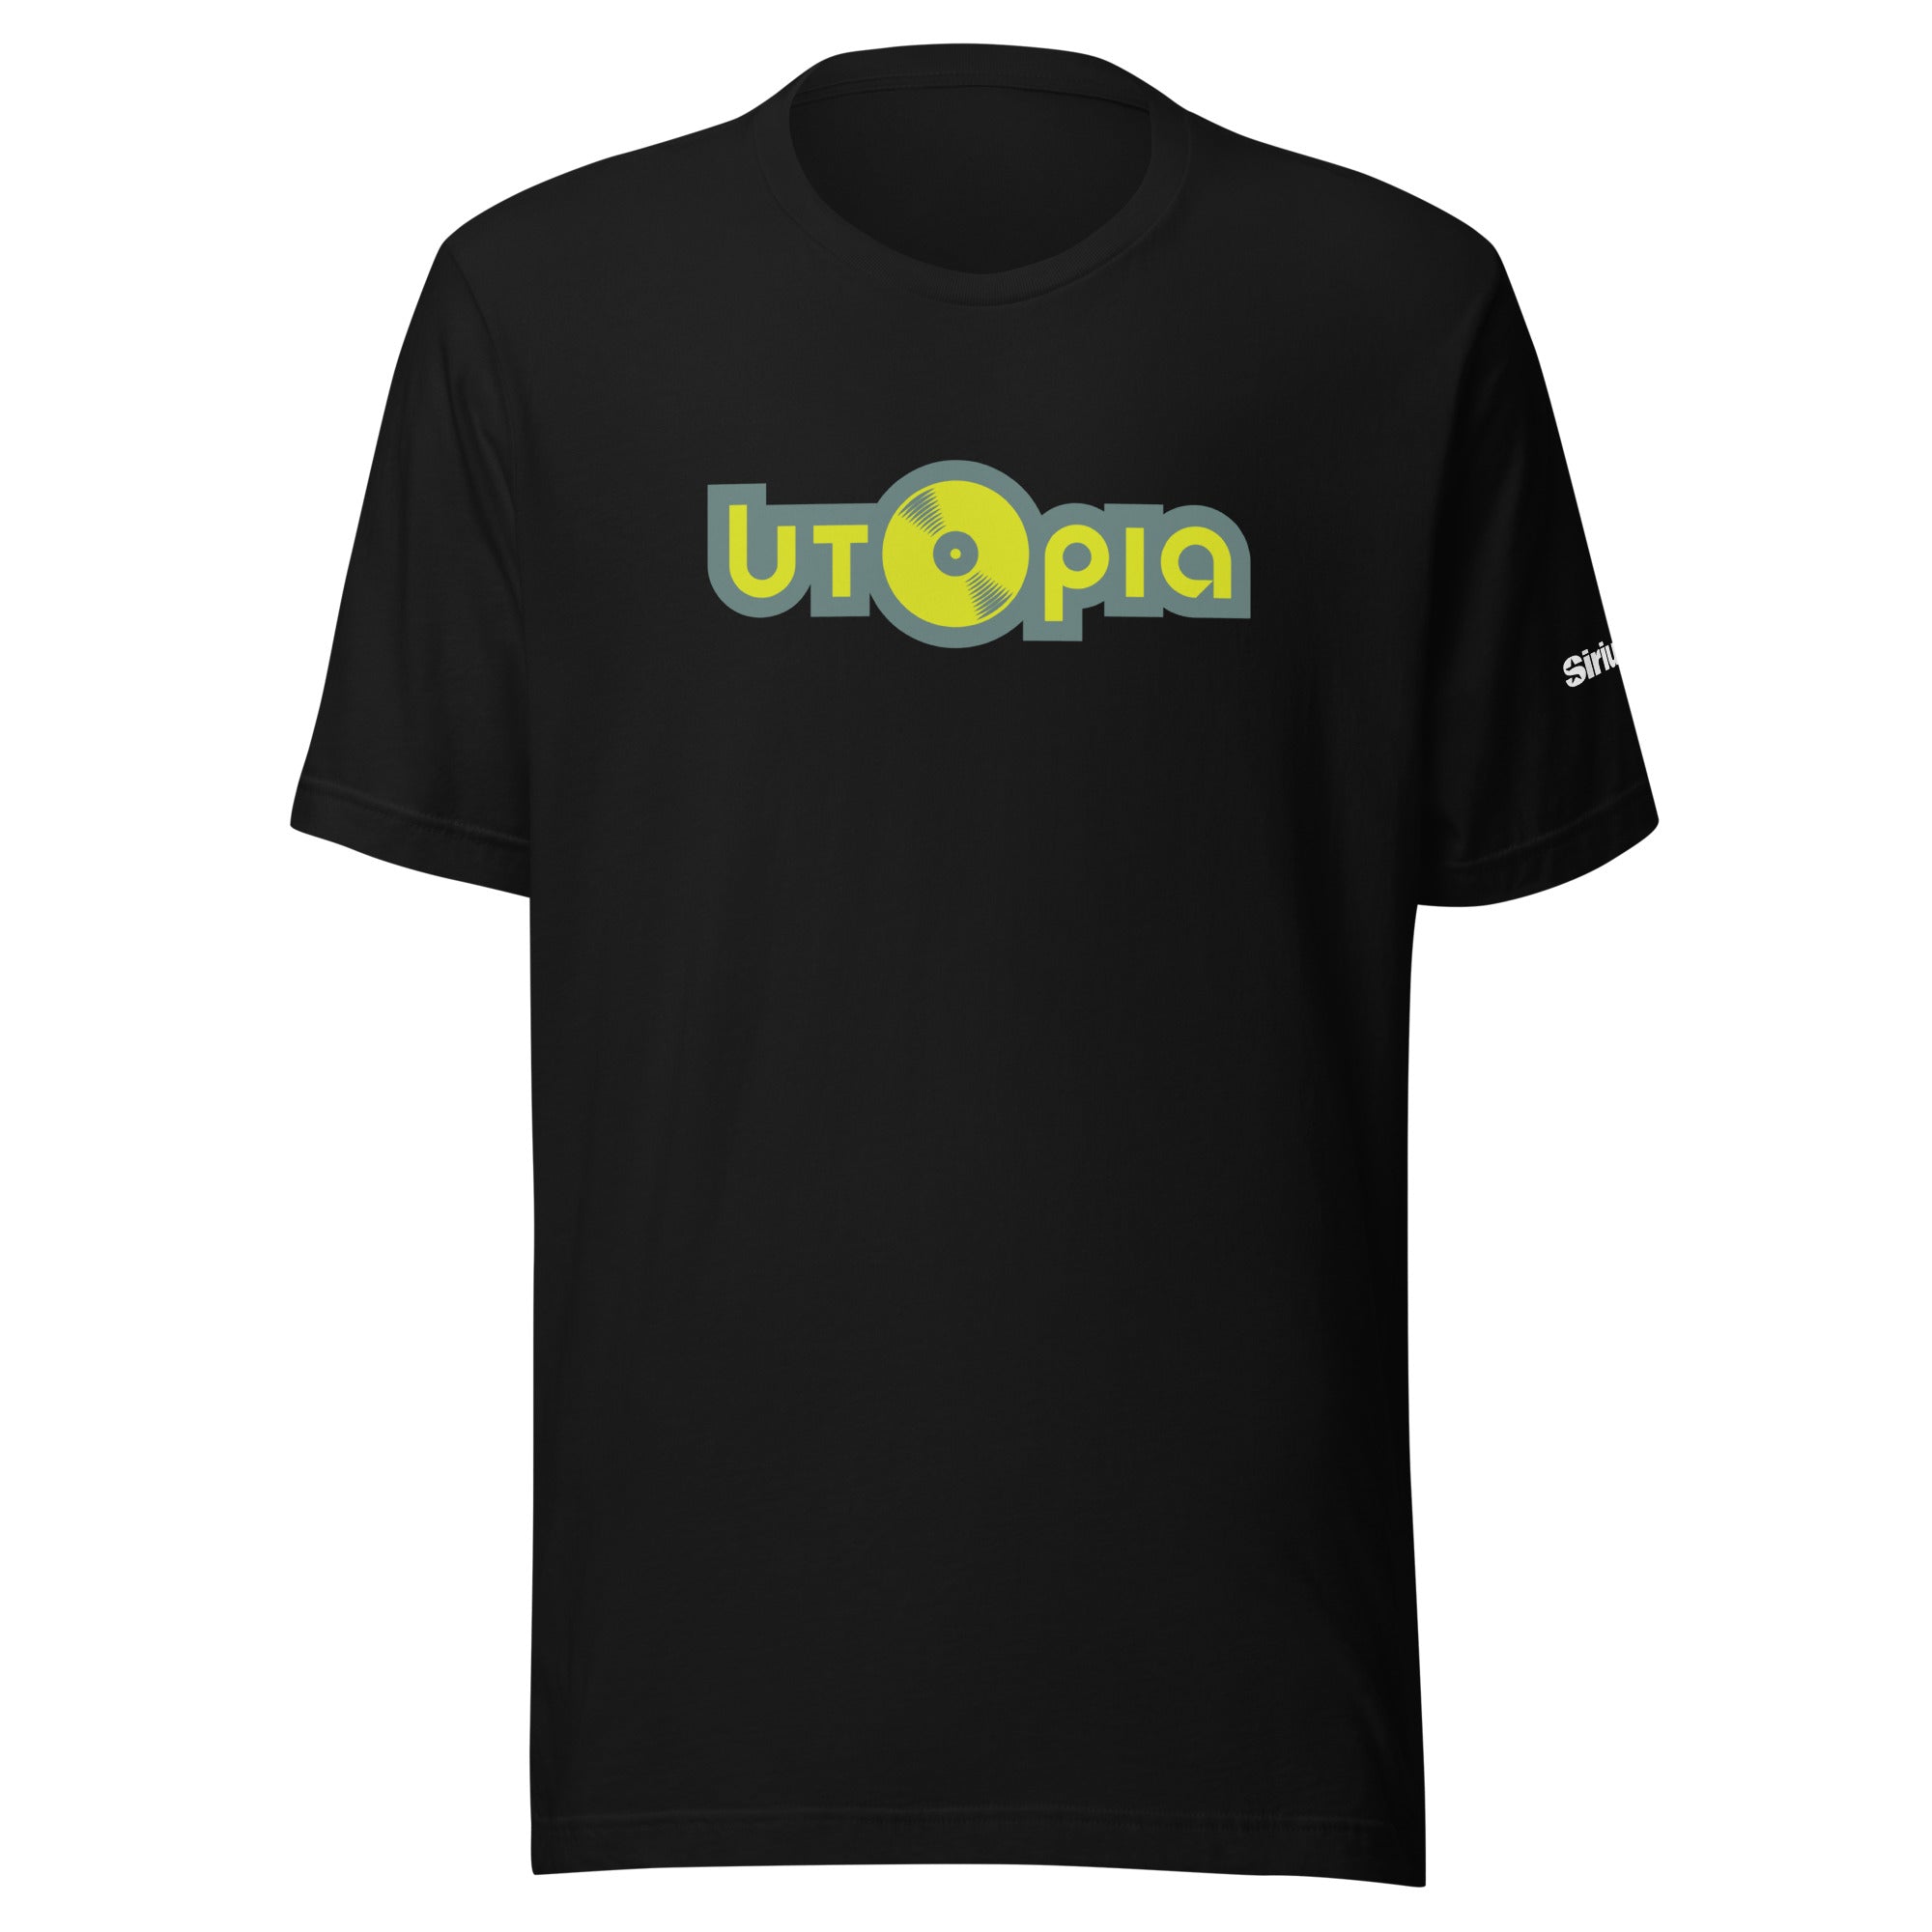 Utopia: T-shirt (Black)